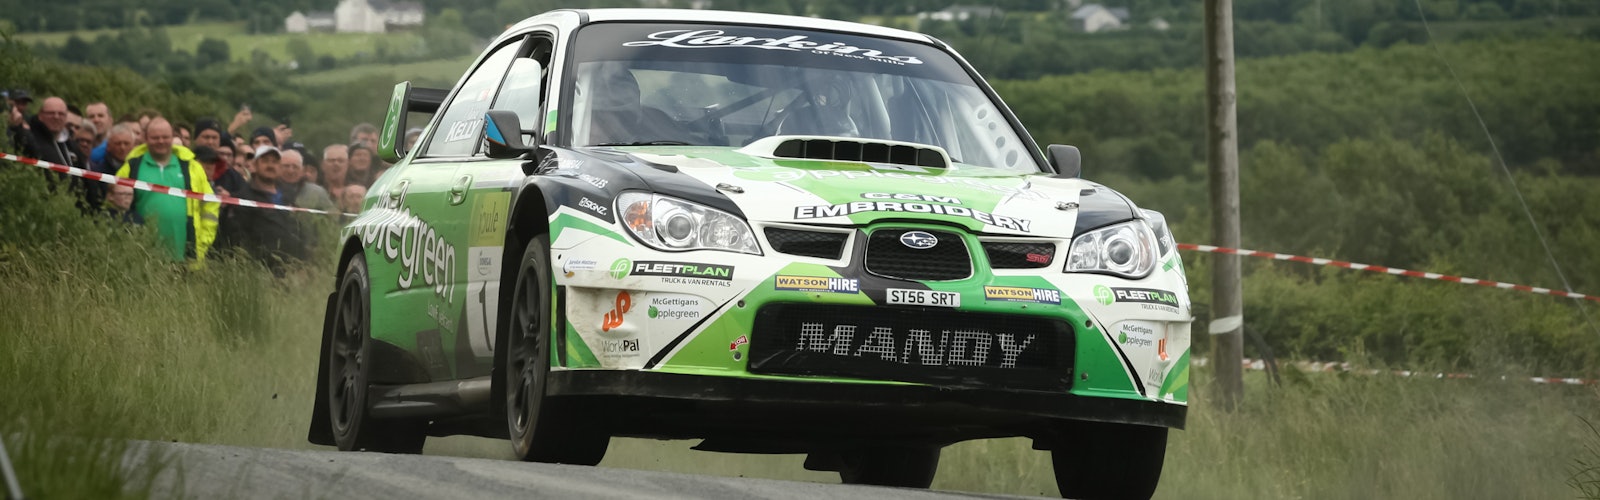 Manus Kelly, Donegal Rally 2018, Subaru Impreza S12B WRC 2007